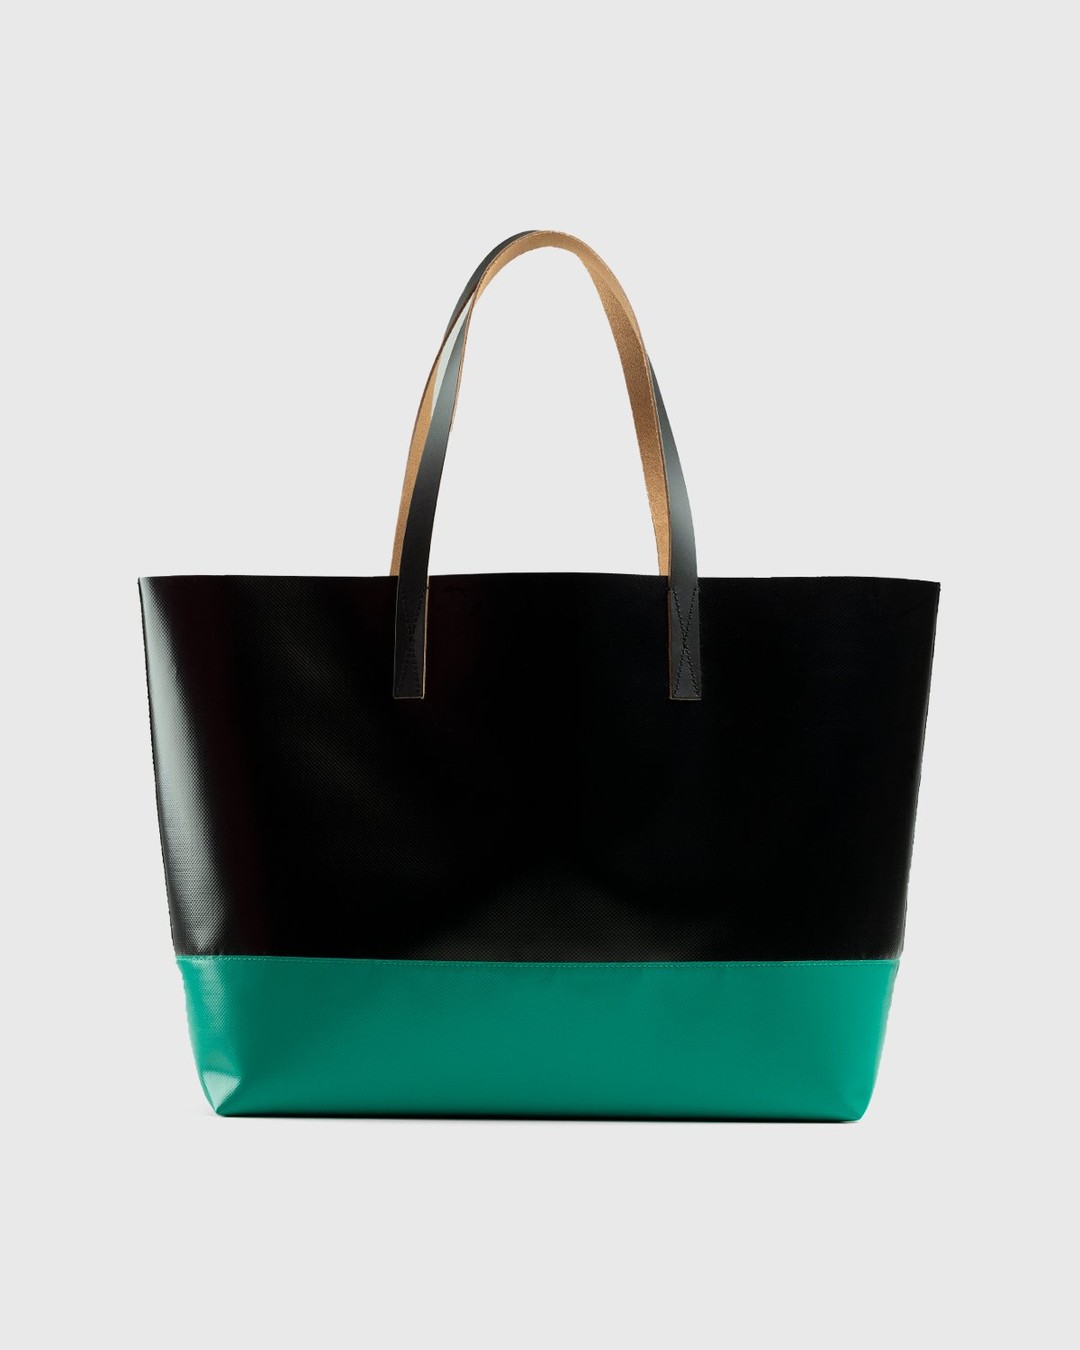 Marni – Tribeca Two-Tone Tote Bag Black/Green - Bags - Black - Image 2